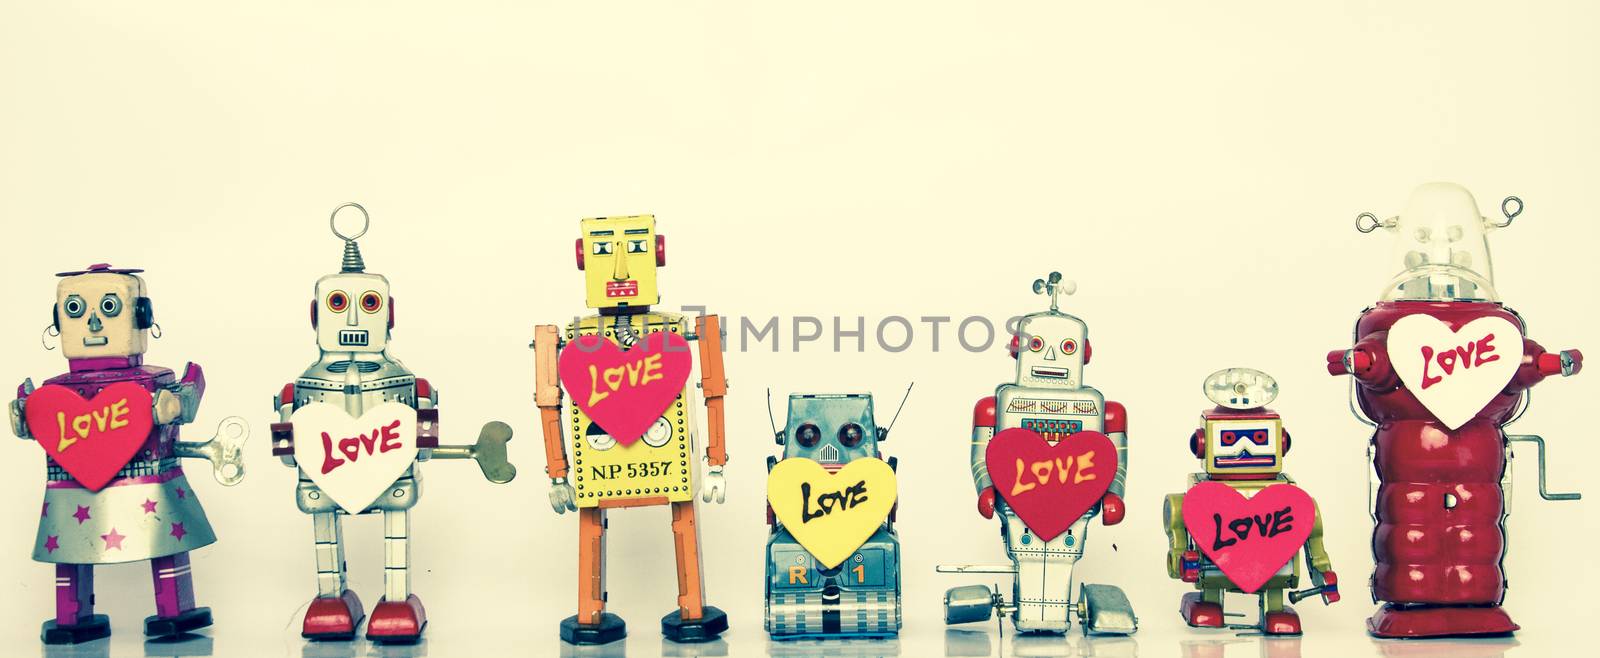 lotts of retro robots in love